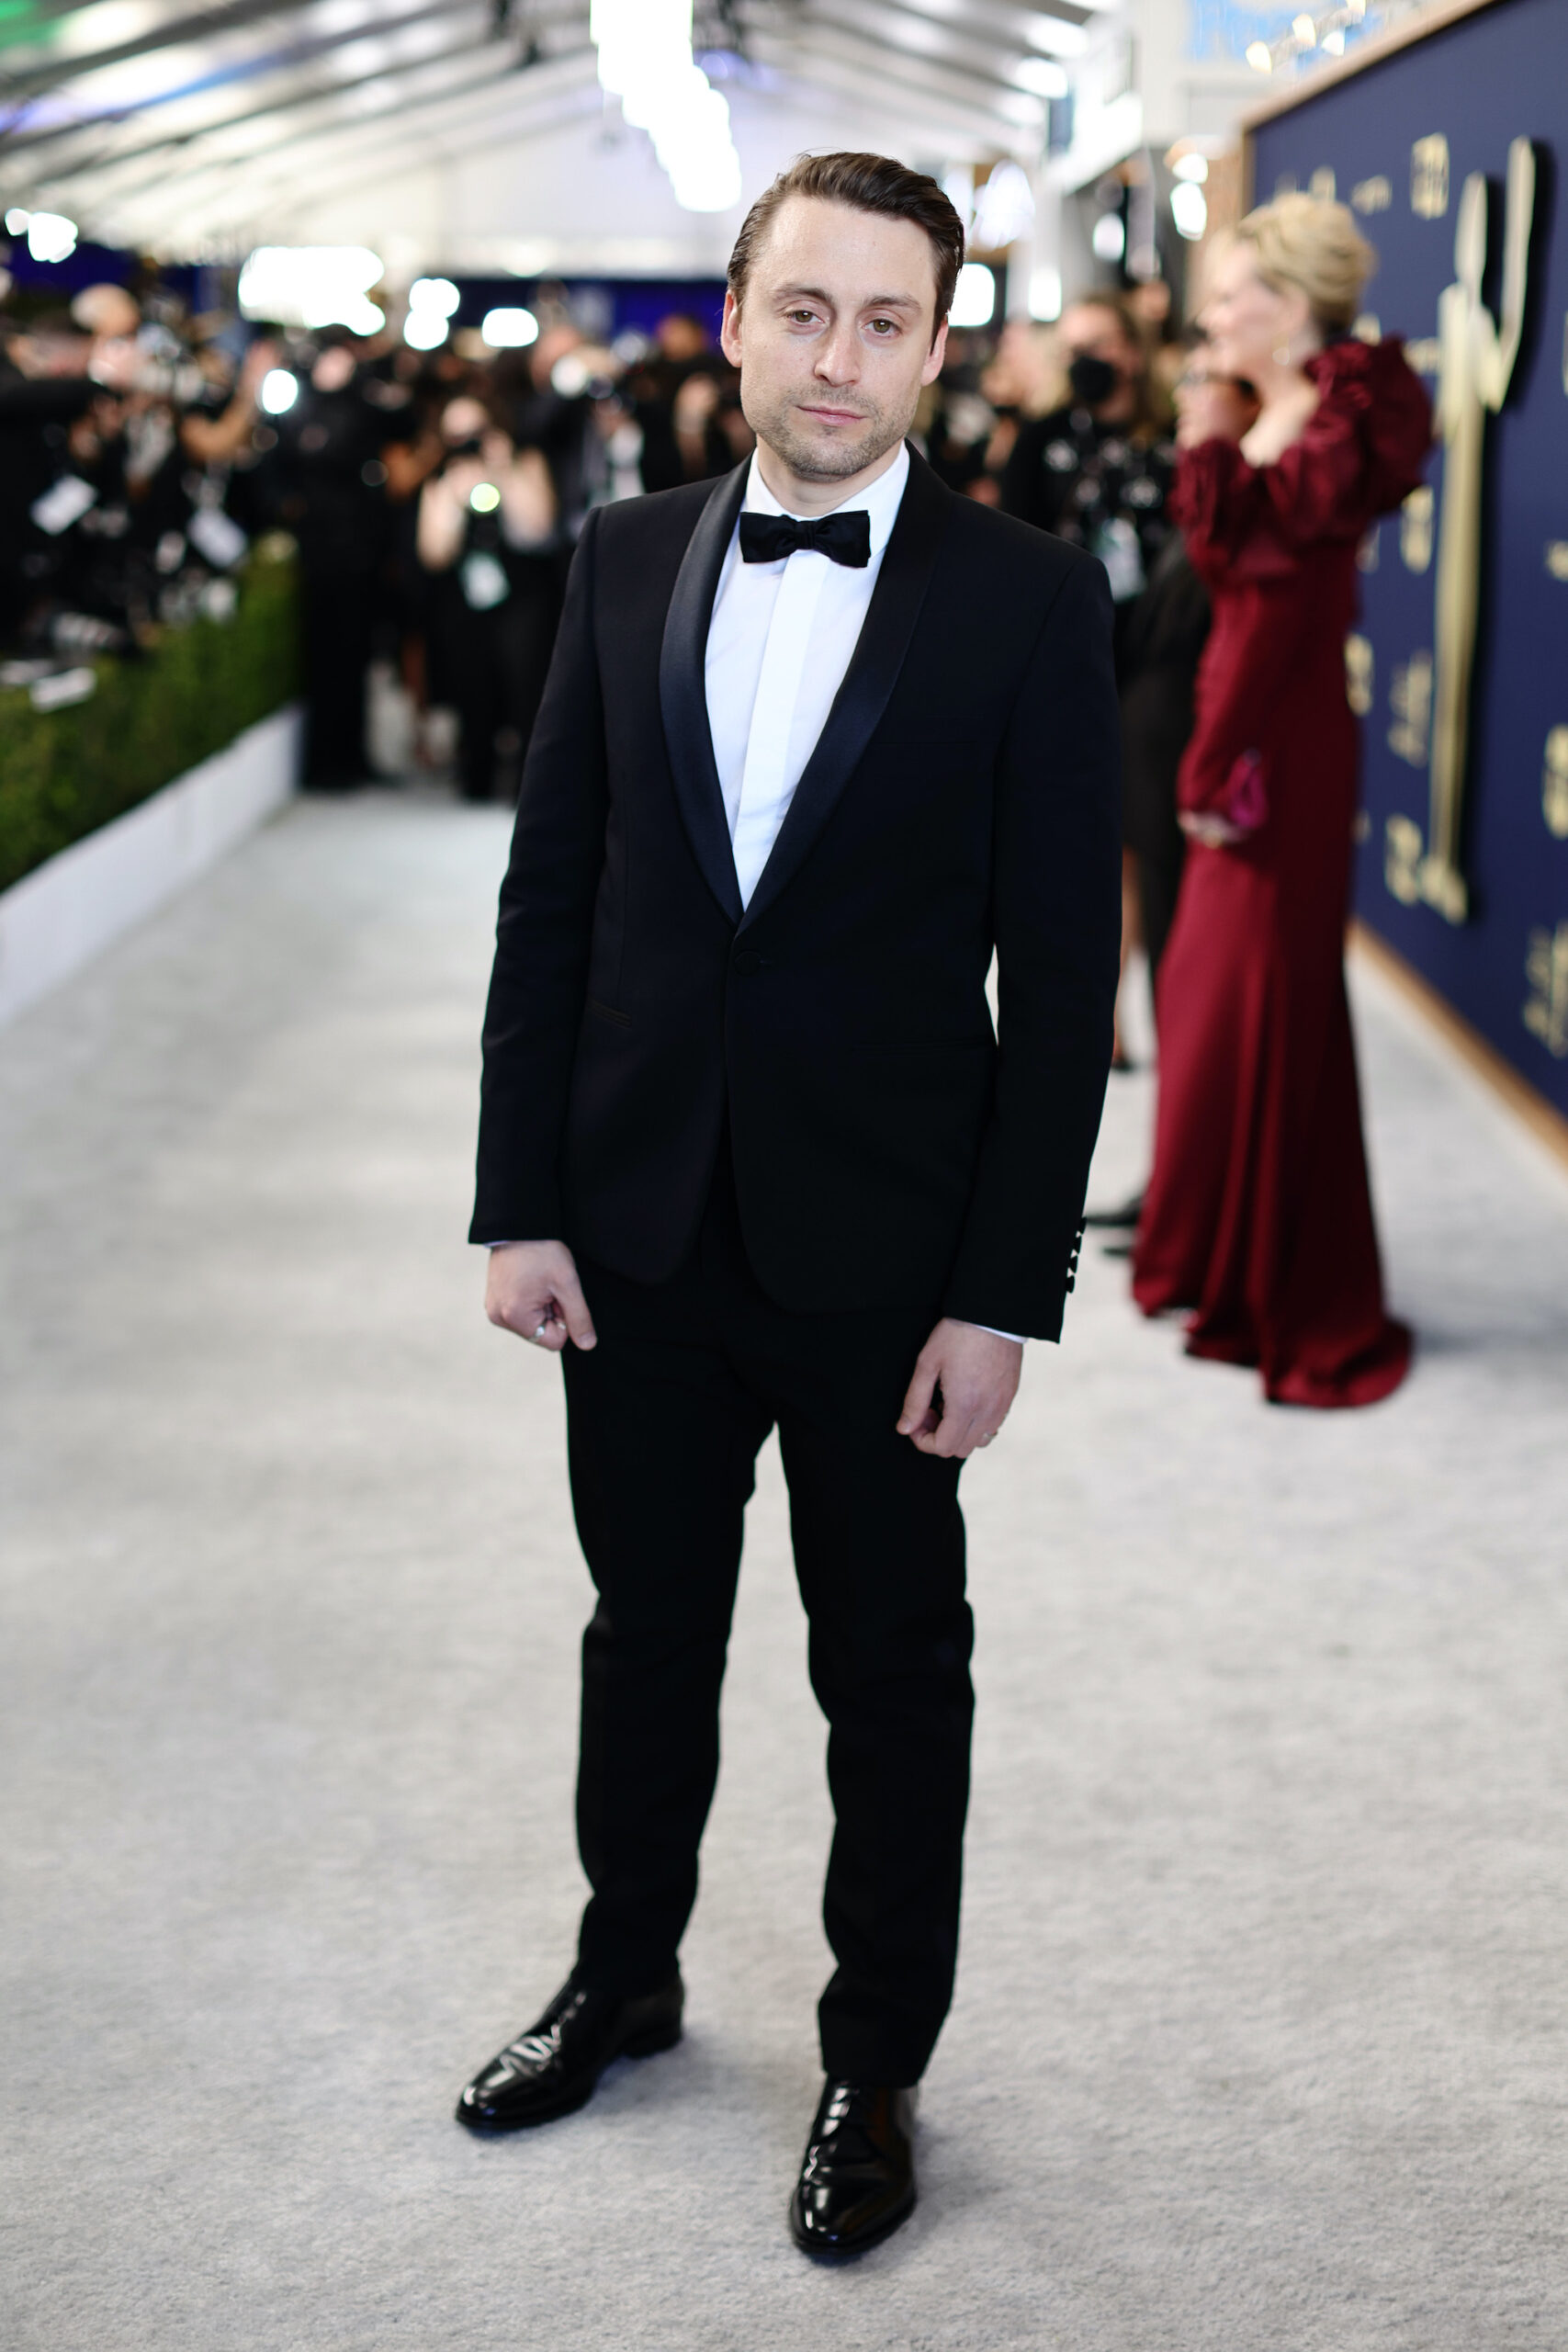 Kieran Culkin attends the 28th Screen Actors Guild Awards